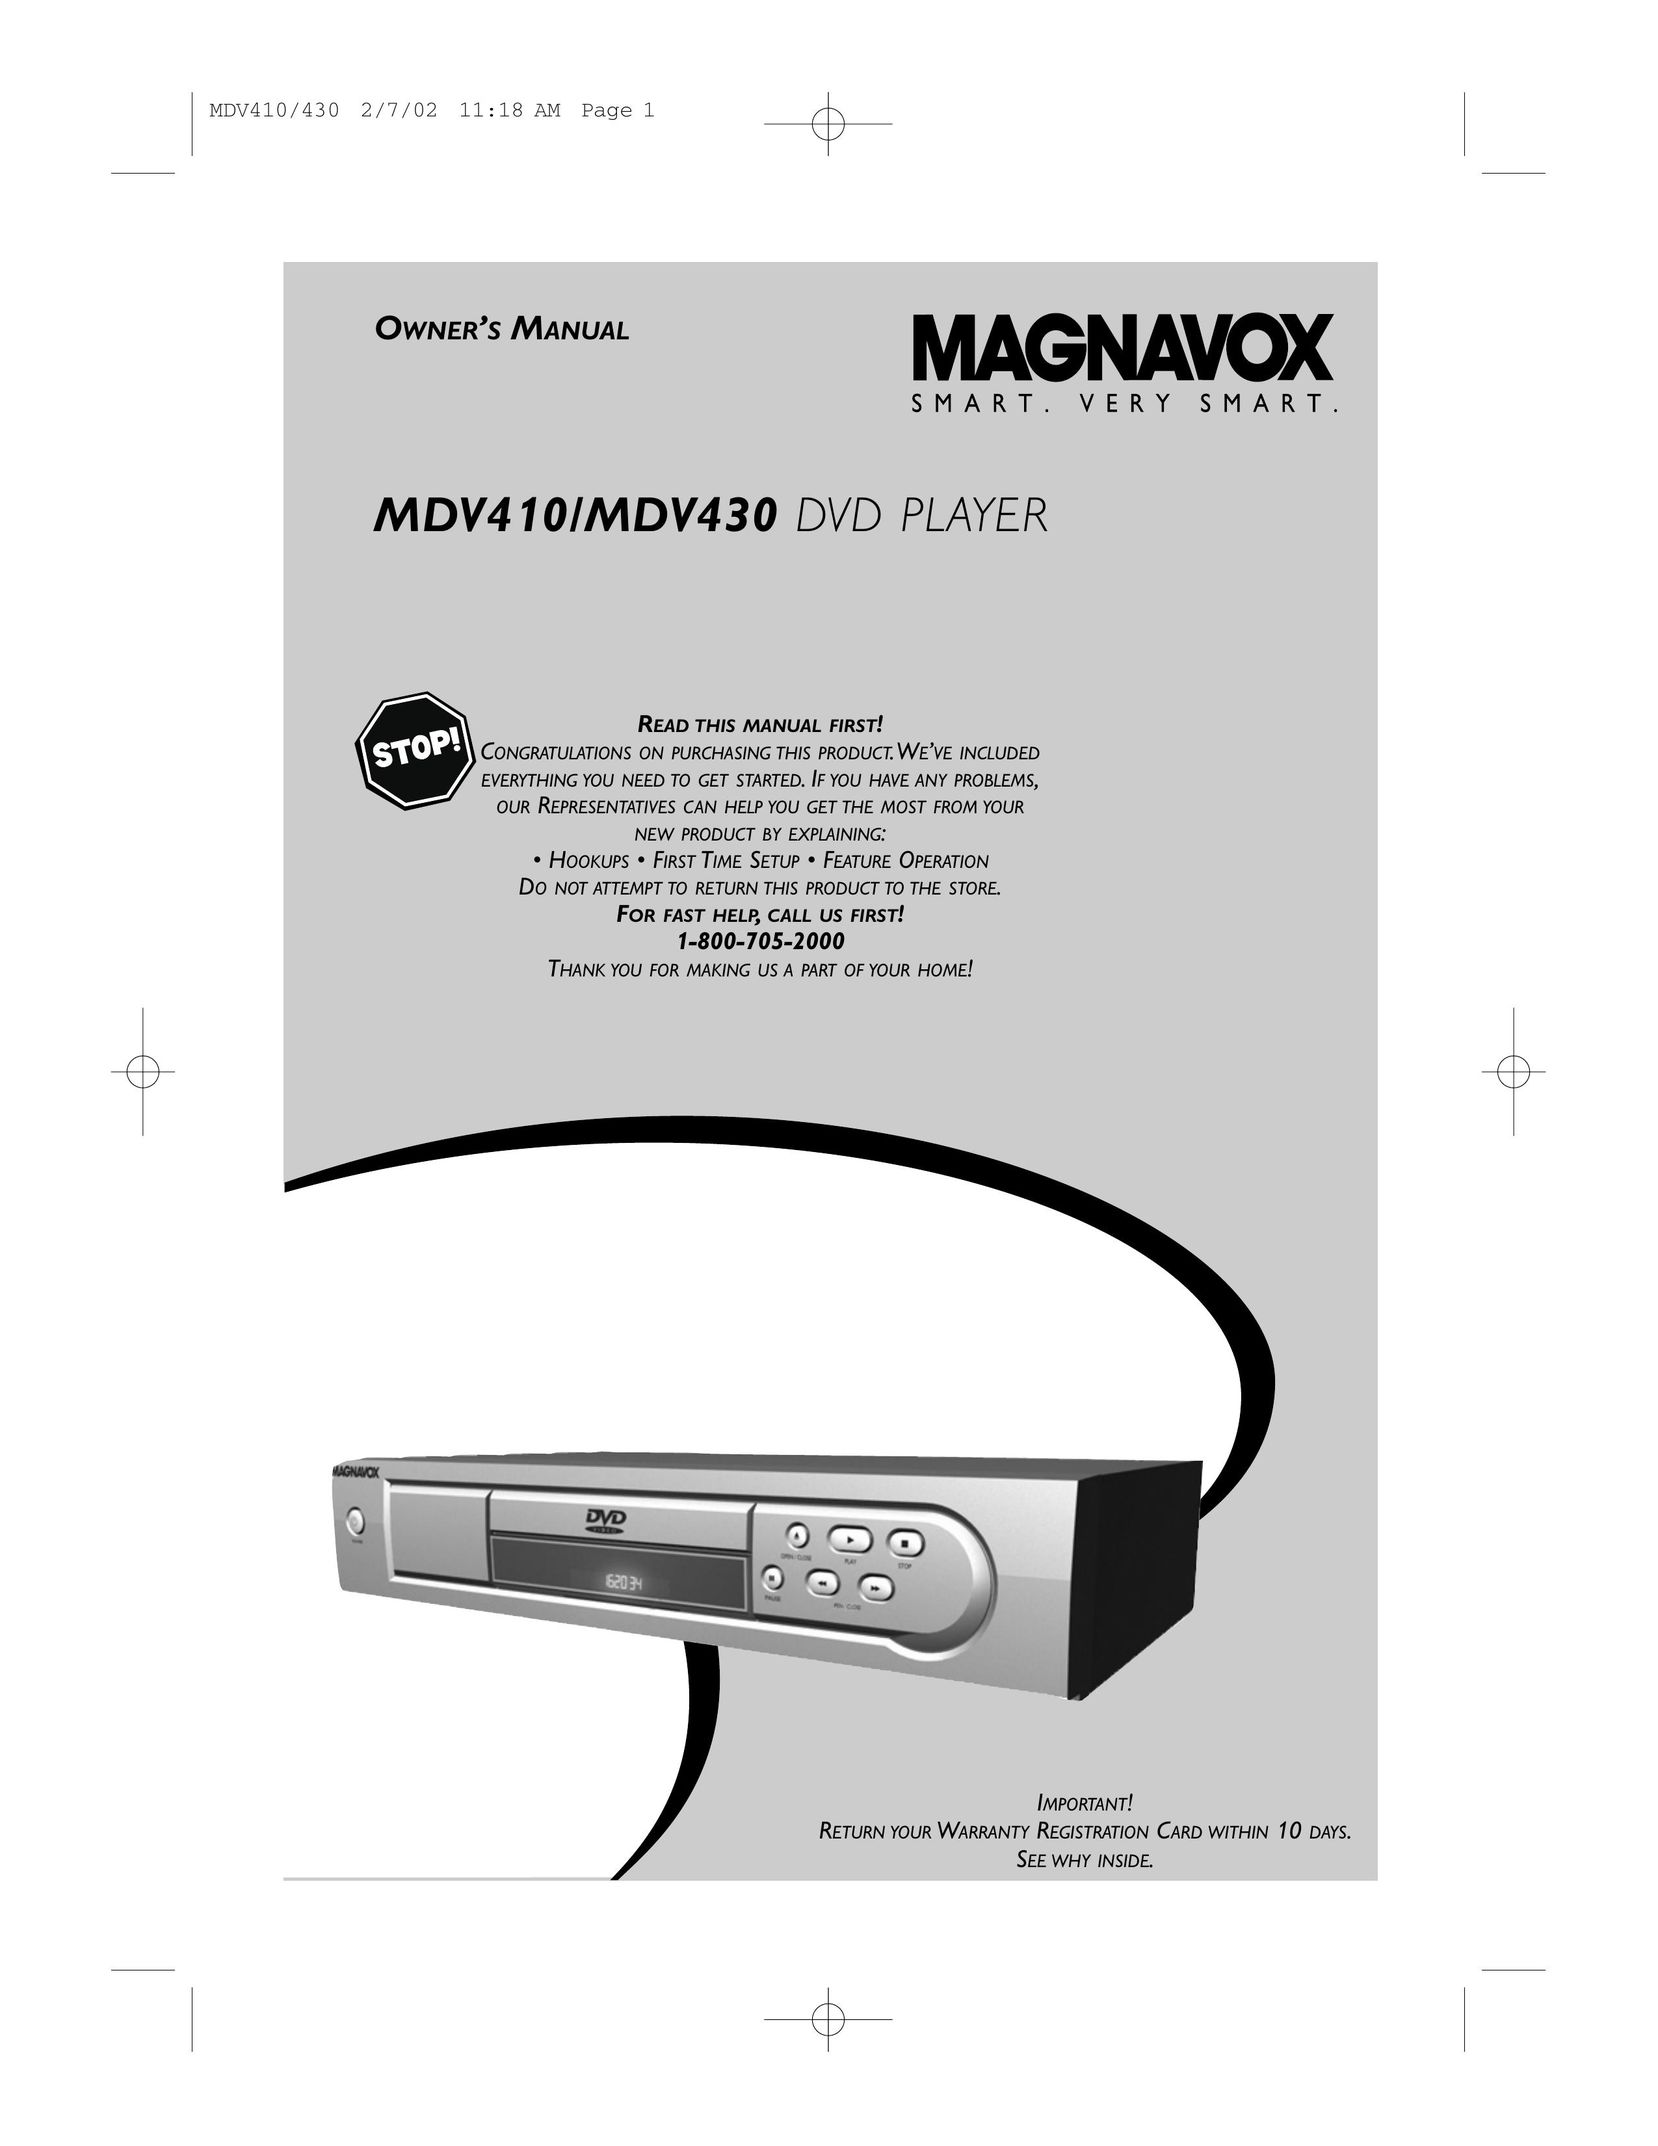 Magnavox MDV410 Portable DVD Player User Manual